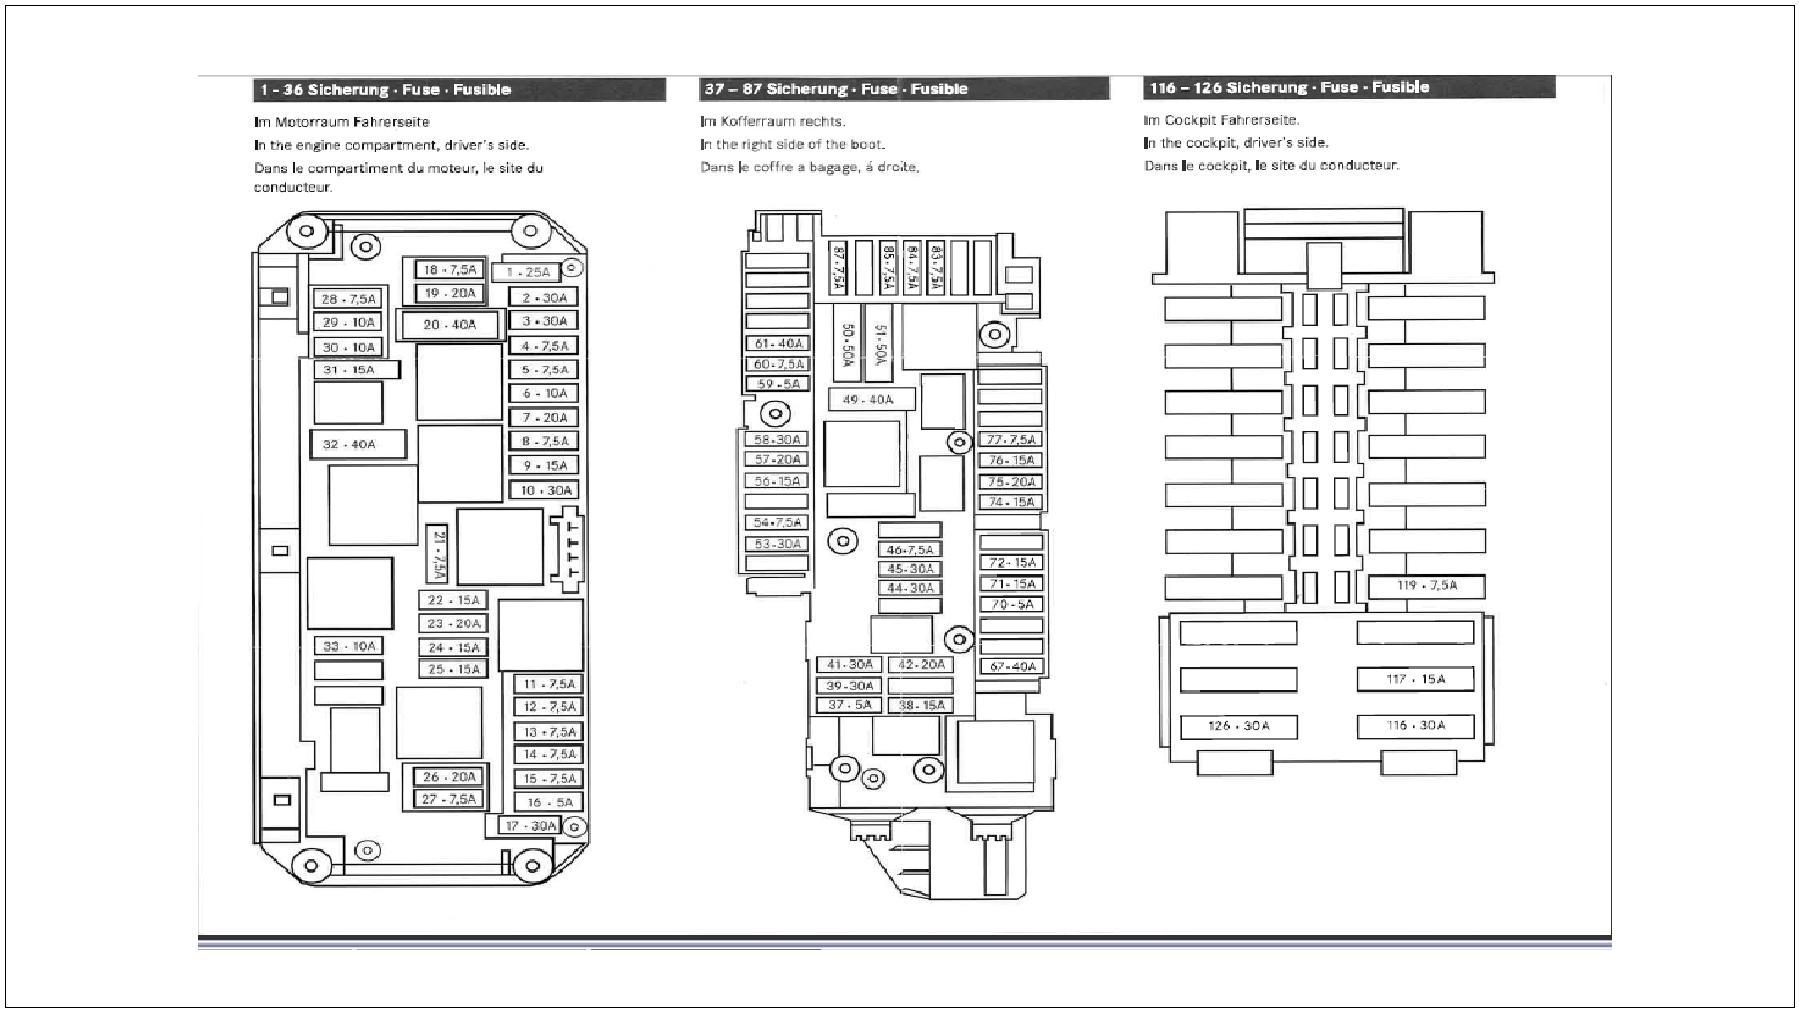 [DIAGRAM] Mercedes Benz W204 Fuse Box Diagram FULL Version ...